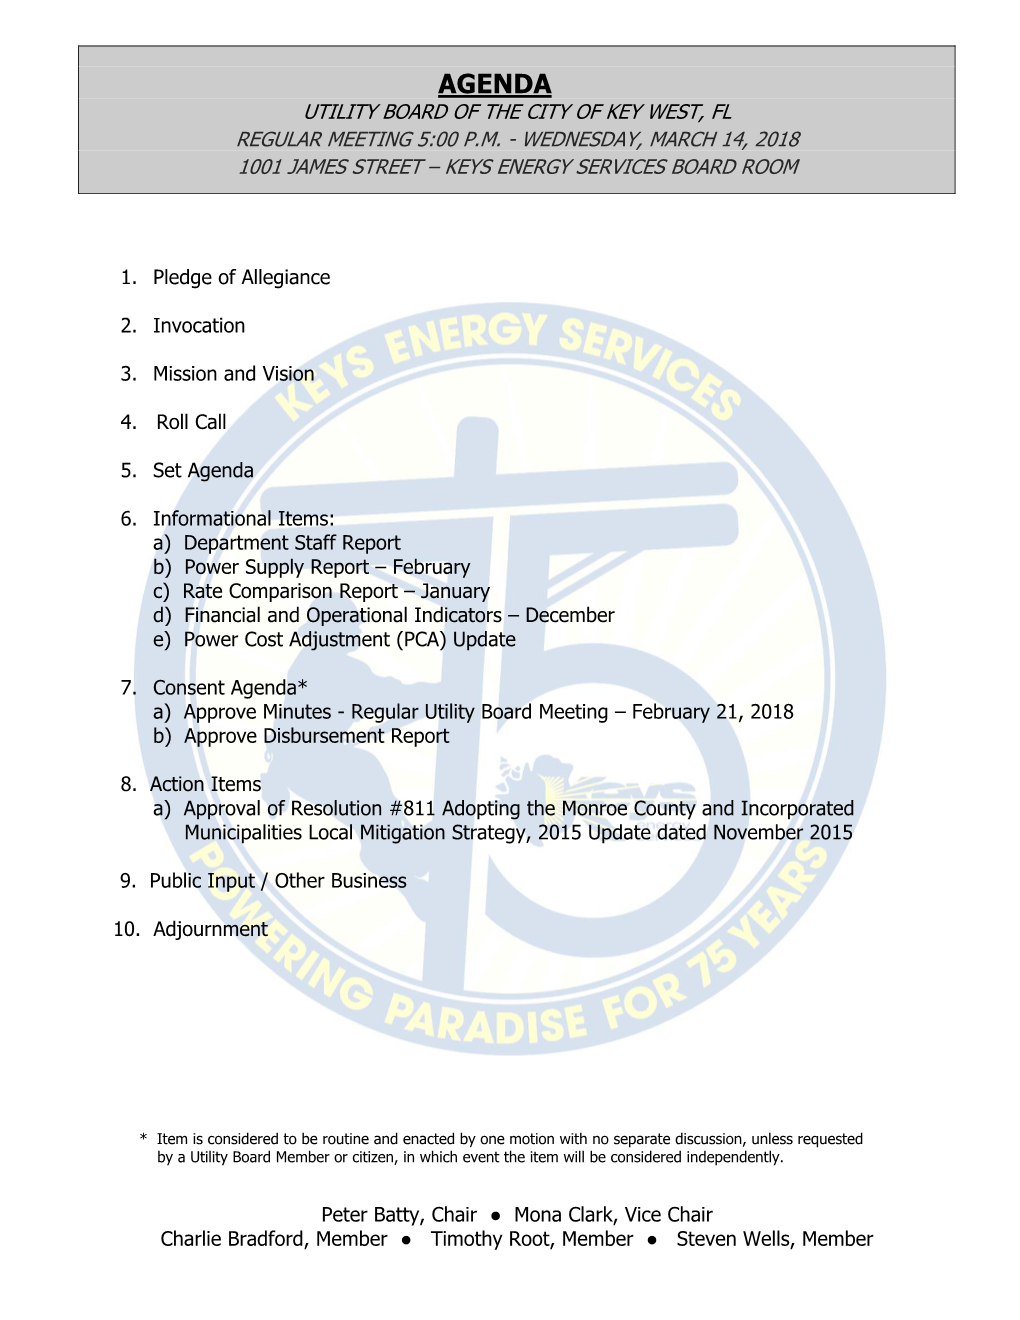 Agenda Utility Board of the City of Key West, Fl Regular Meeting 5:00 P.M